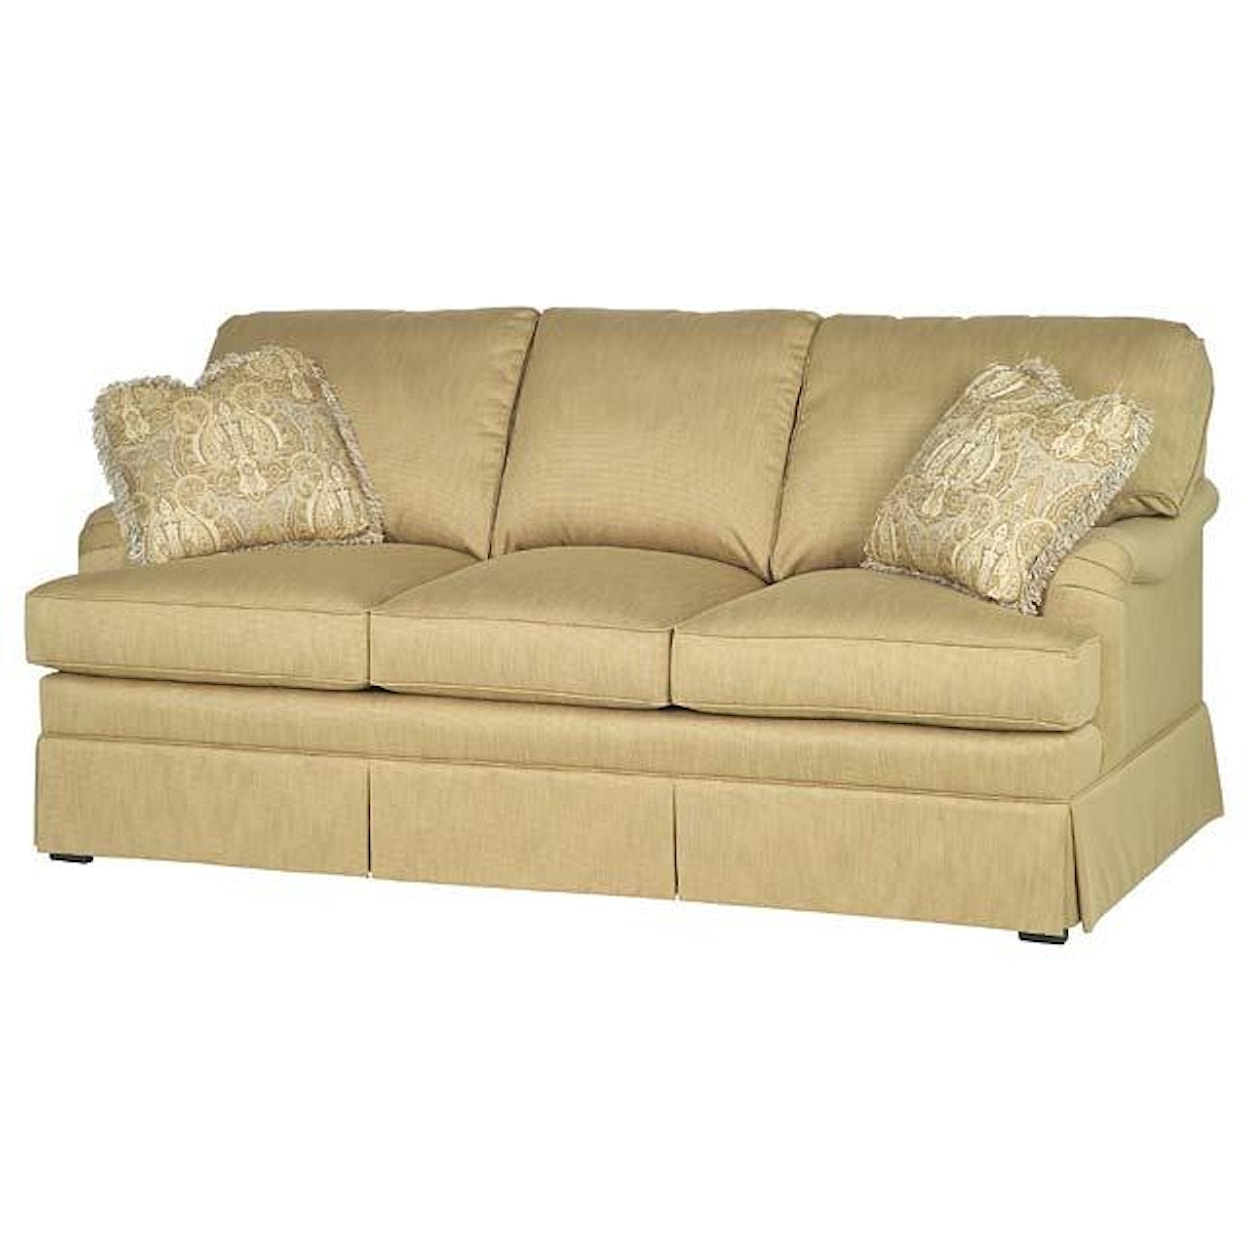 Taylor King Casual Corners Customizable Sofa